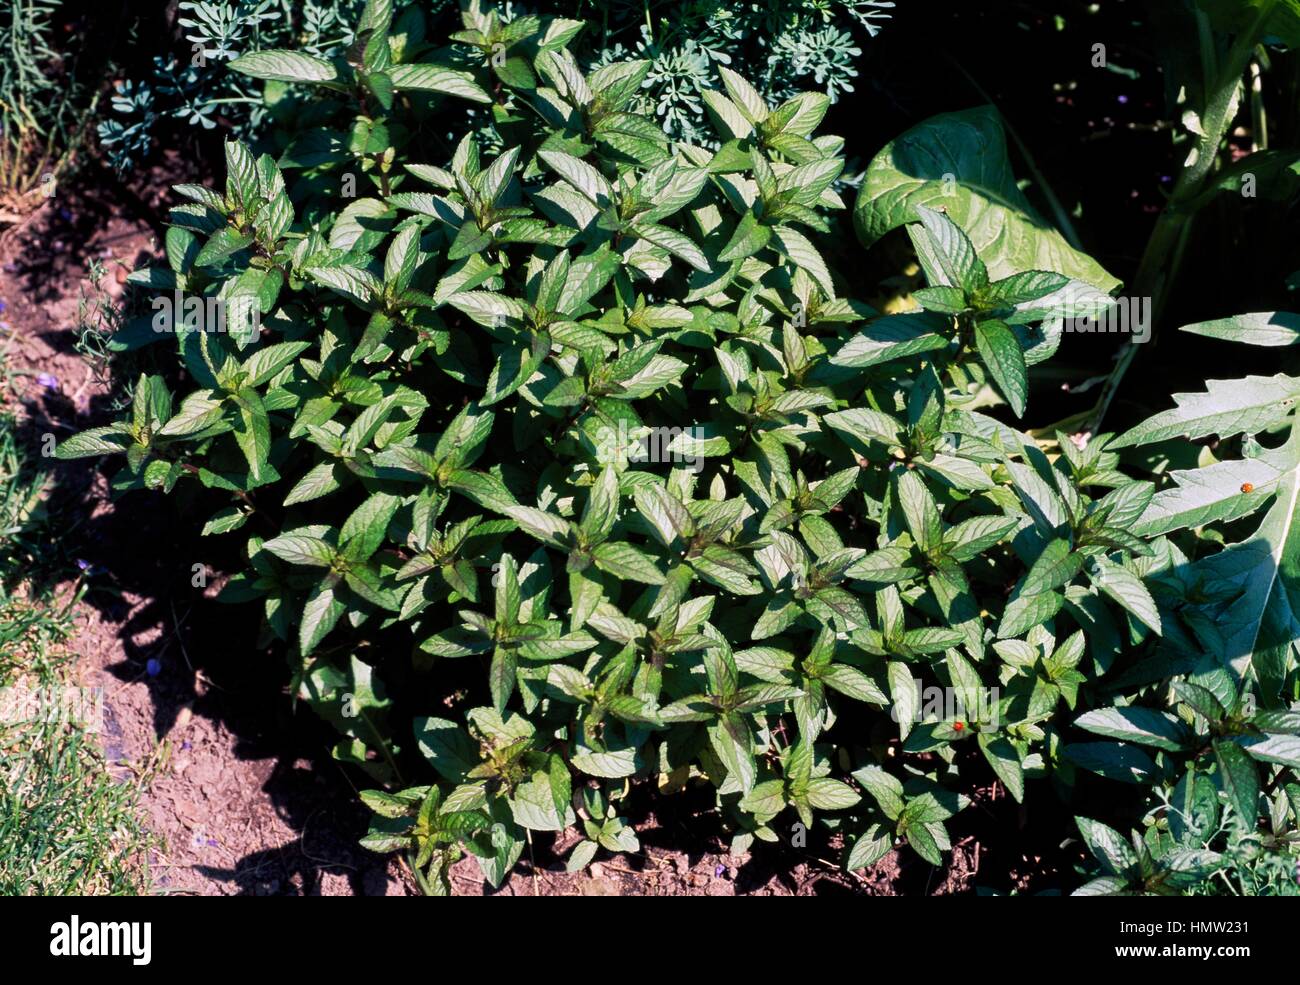 Lemon mint (Mentha x piperita var citrata), Lamiaceae. Stock Photo